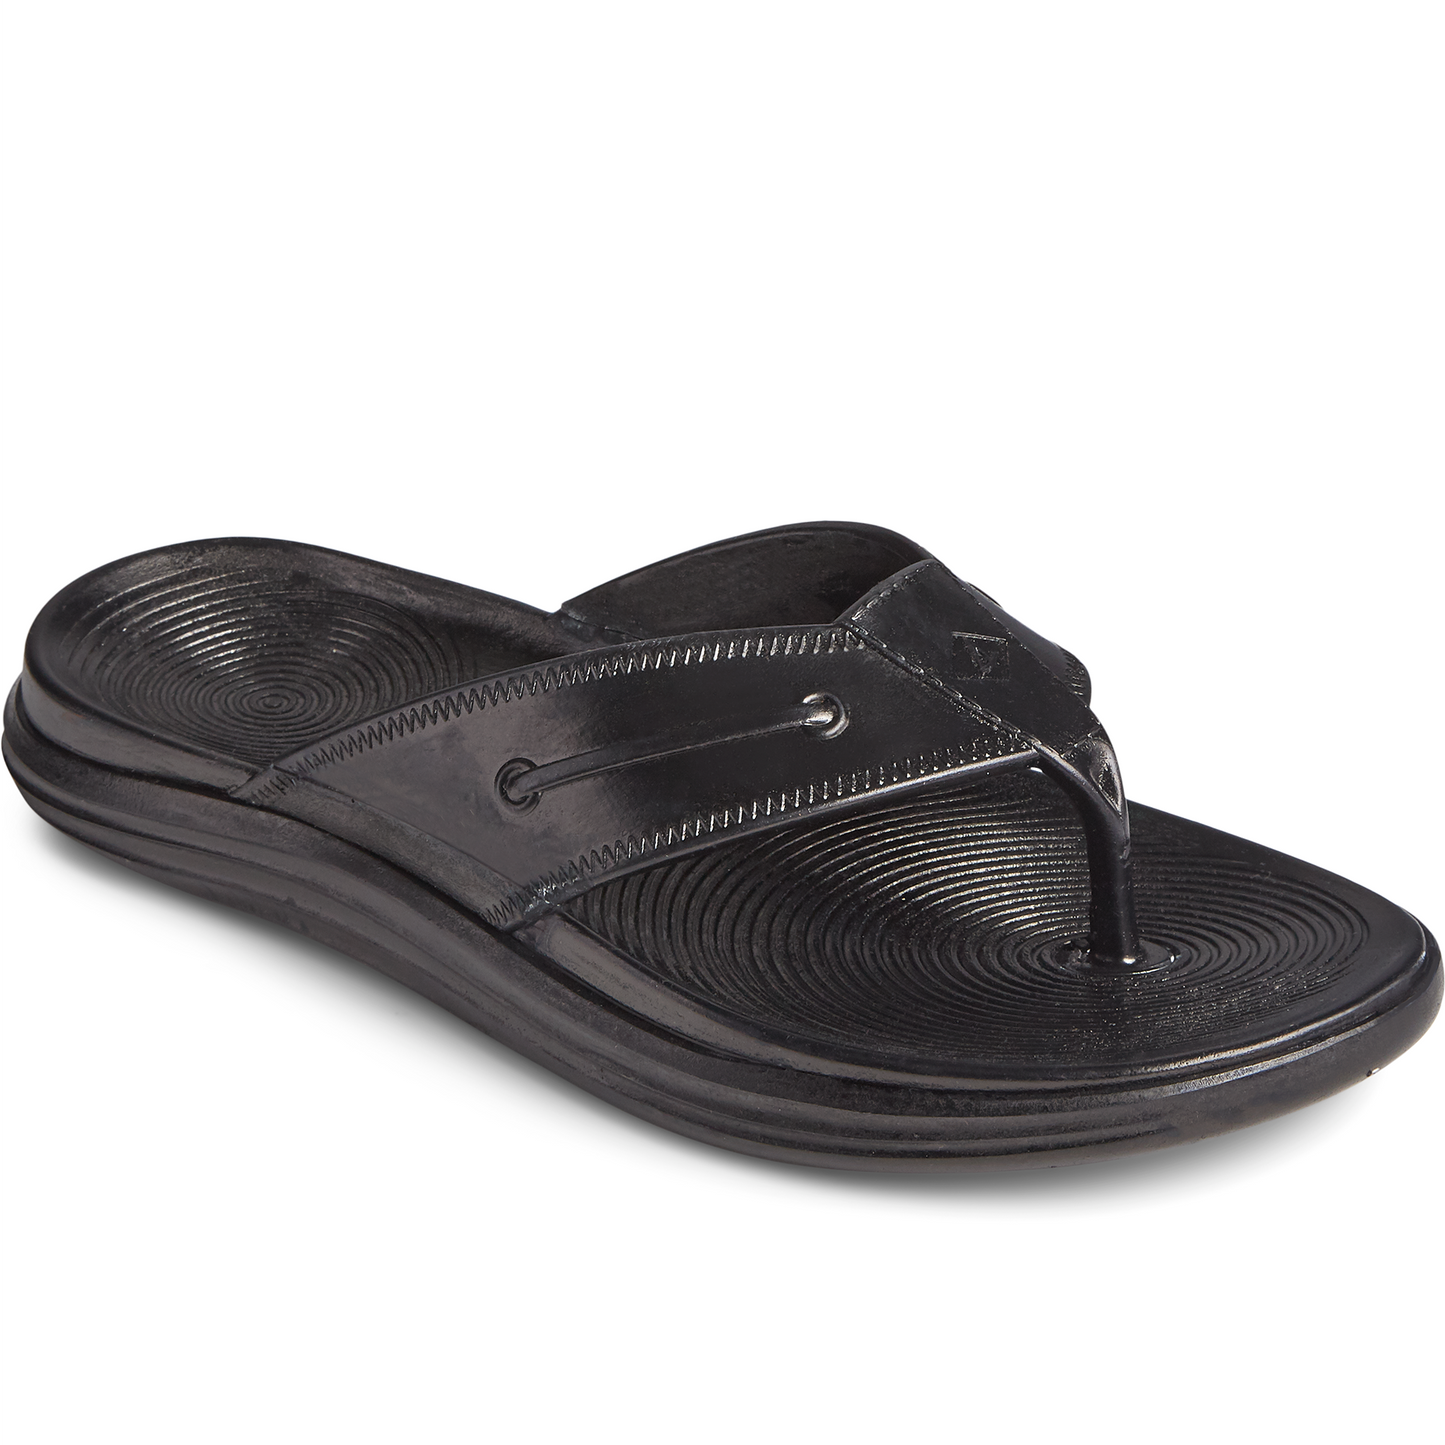 Sperry Men's Windward Float Flip Flop Sandal - Black (STS23496)